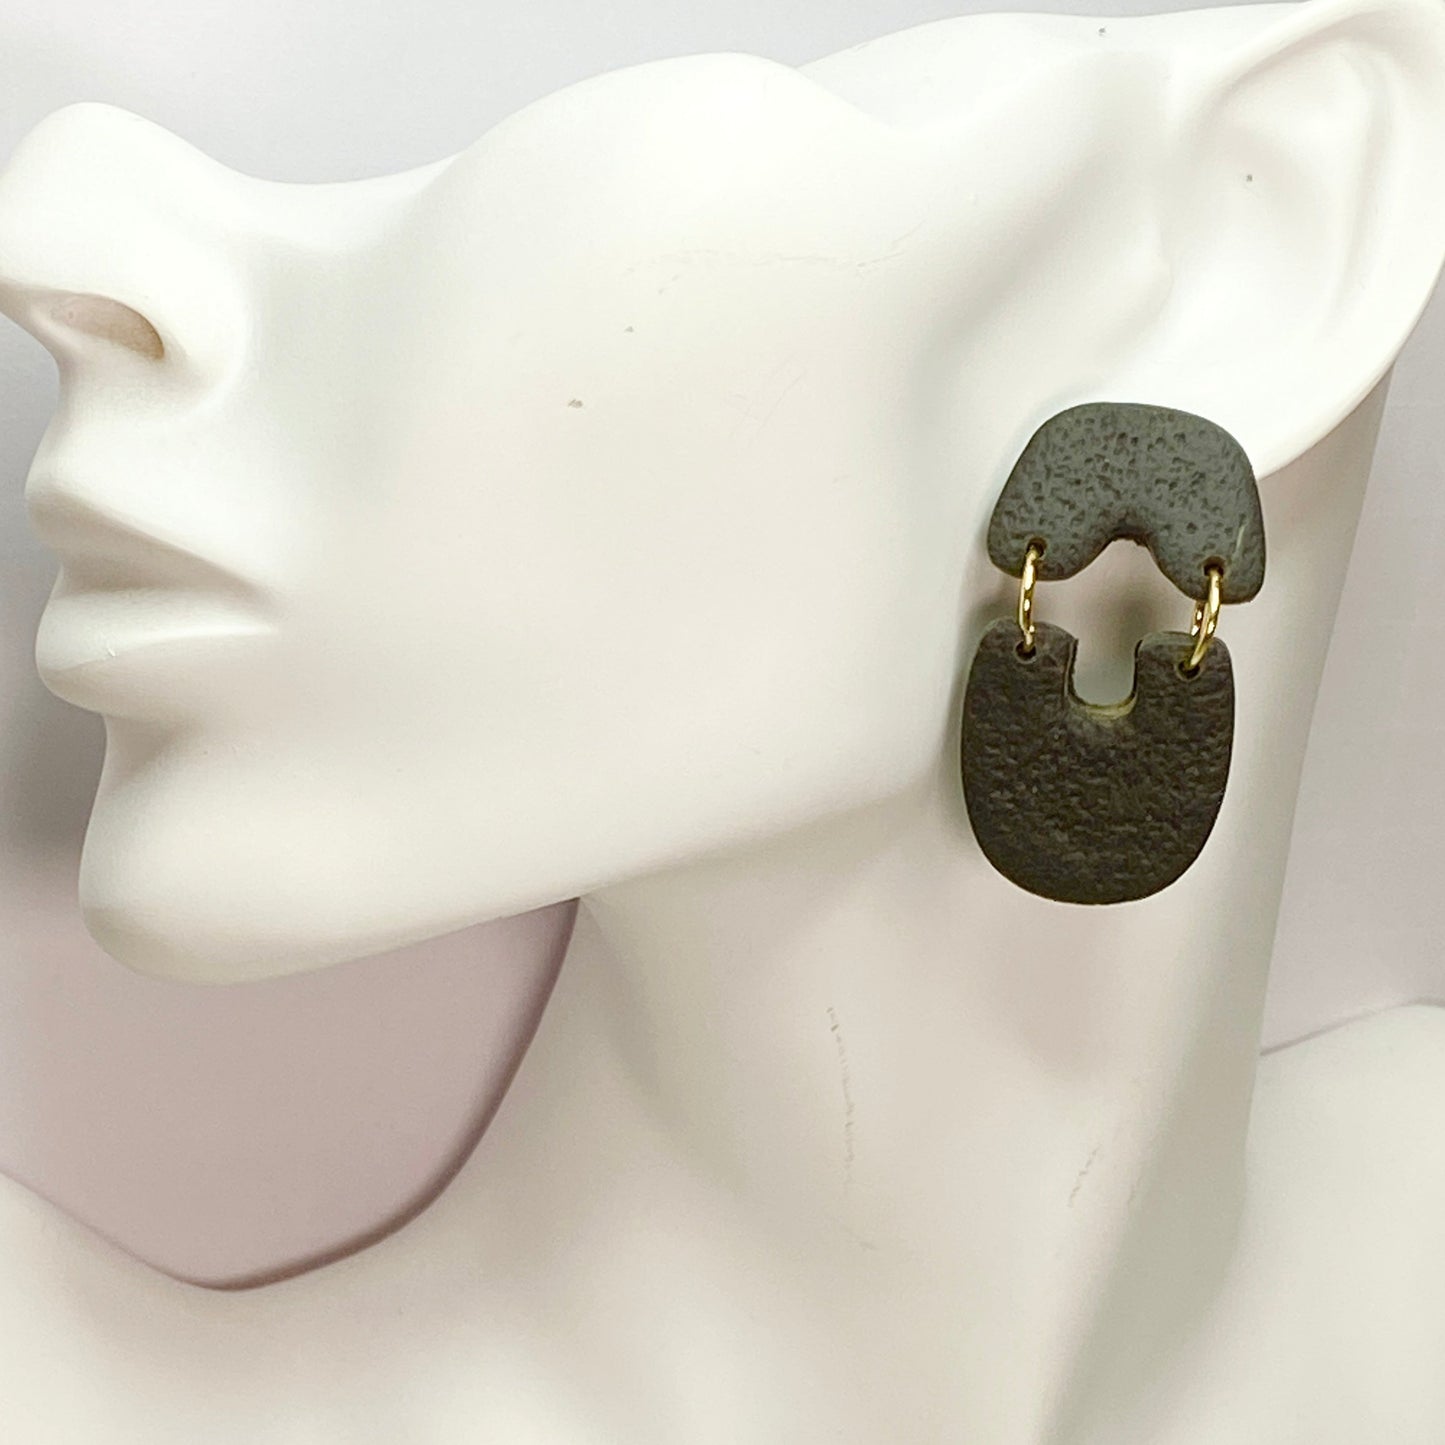  Fall Inspired dark espresso black textured polymer clay dangle earrings 0118 by Wendy Varner Designs